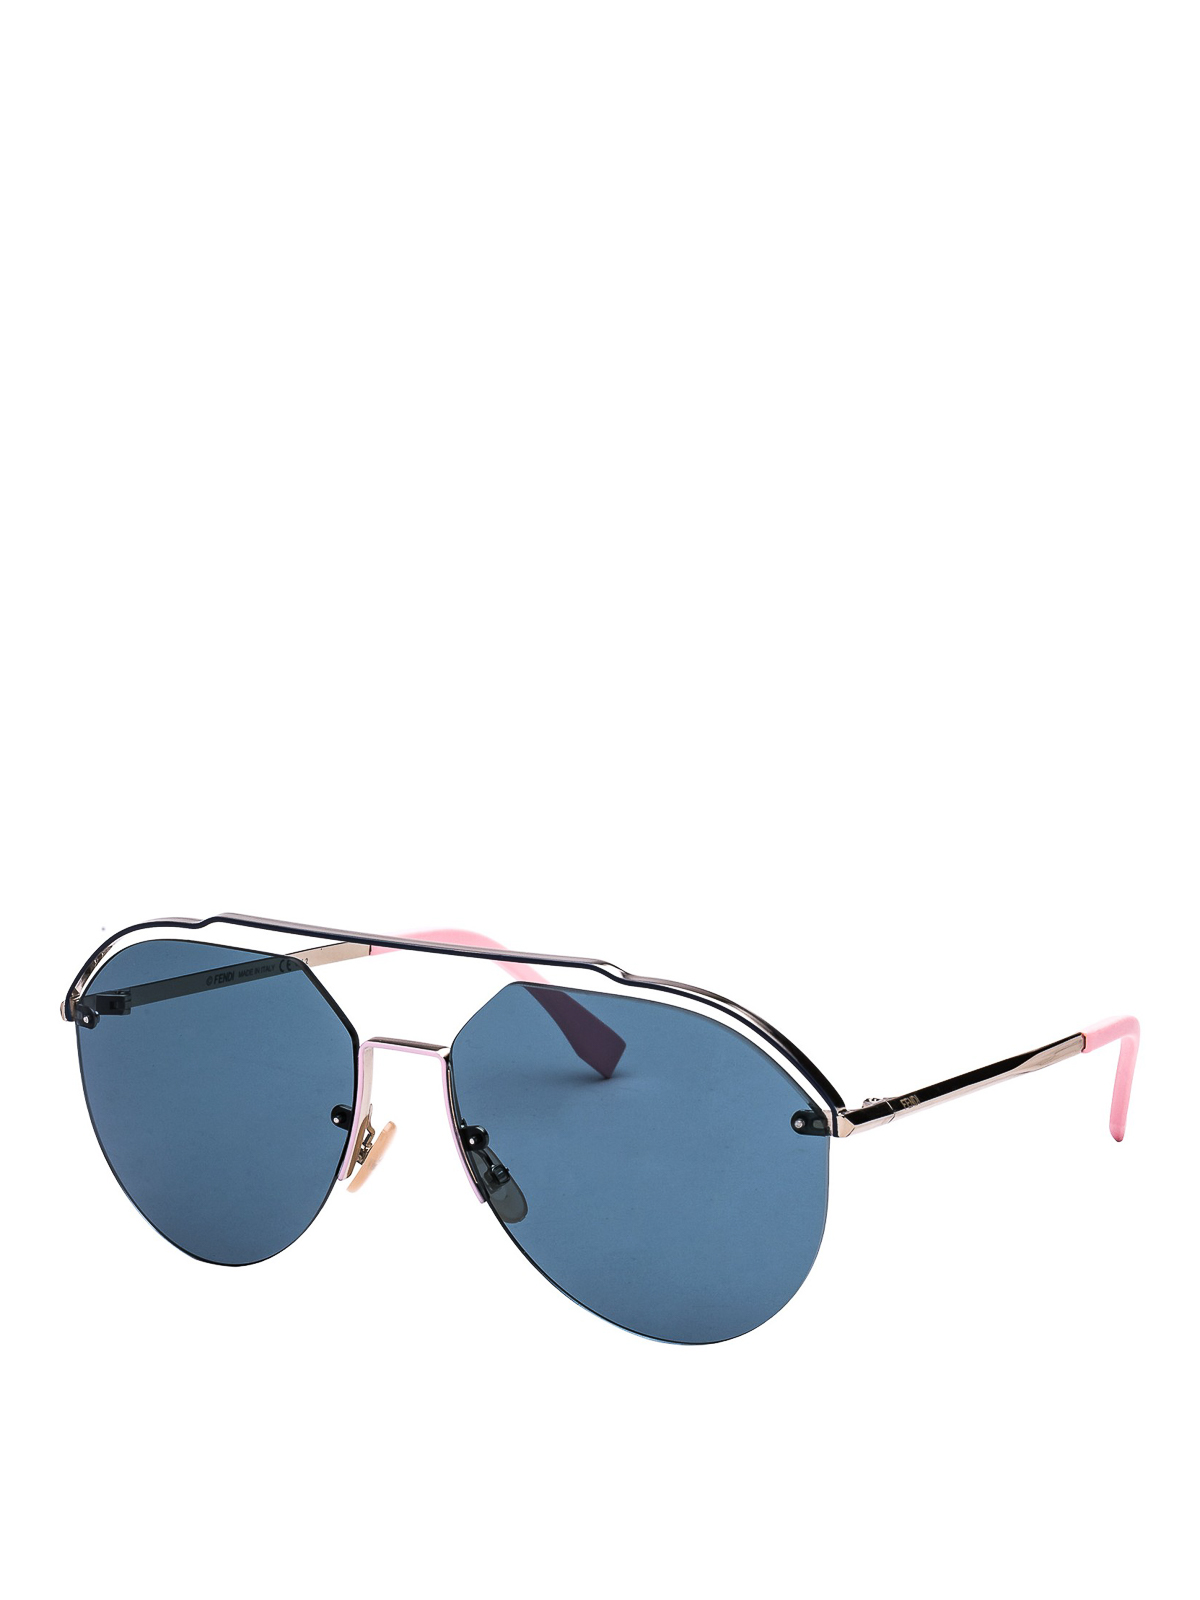 fendi sunglasses blue